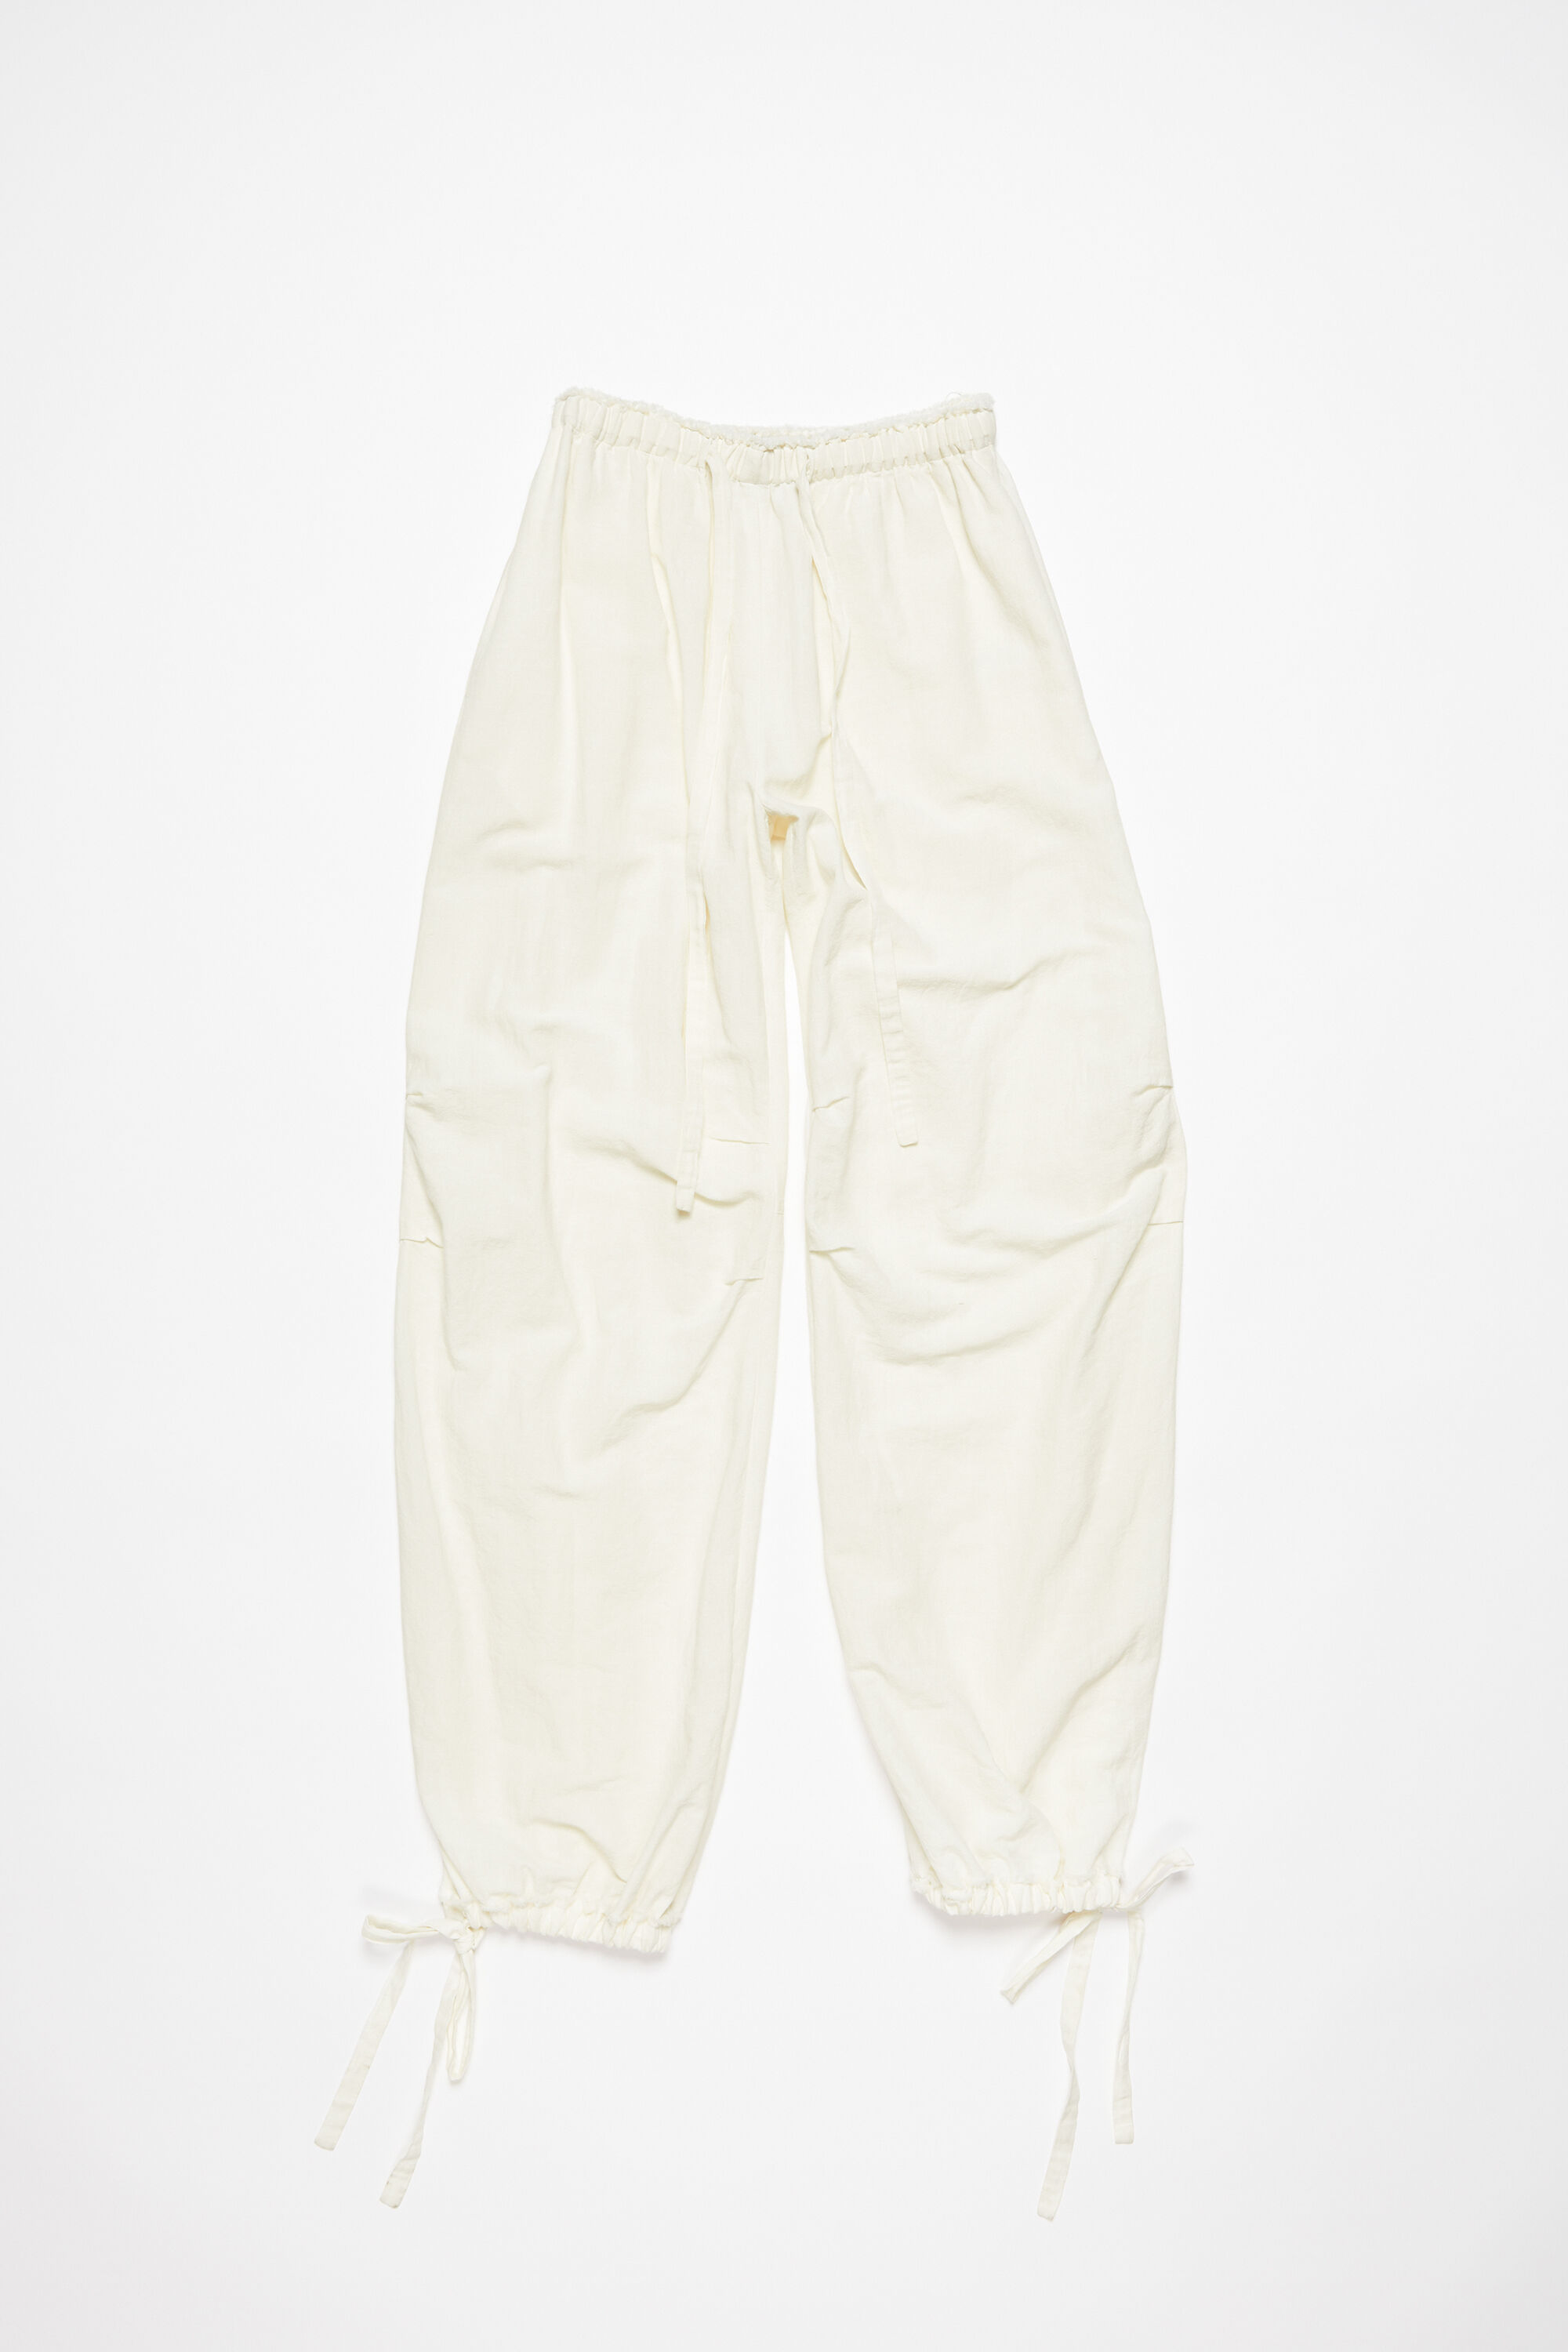 wybzd Women's High Waisted Baggy Cargo Casual Pants Drawstring Y2K Wide Leg  Boyfriend Pants Streetwear Trousers White M - Walmart.com